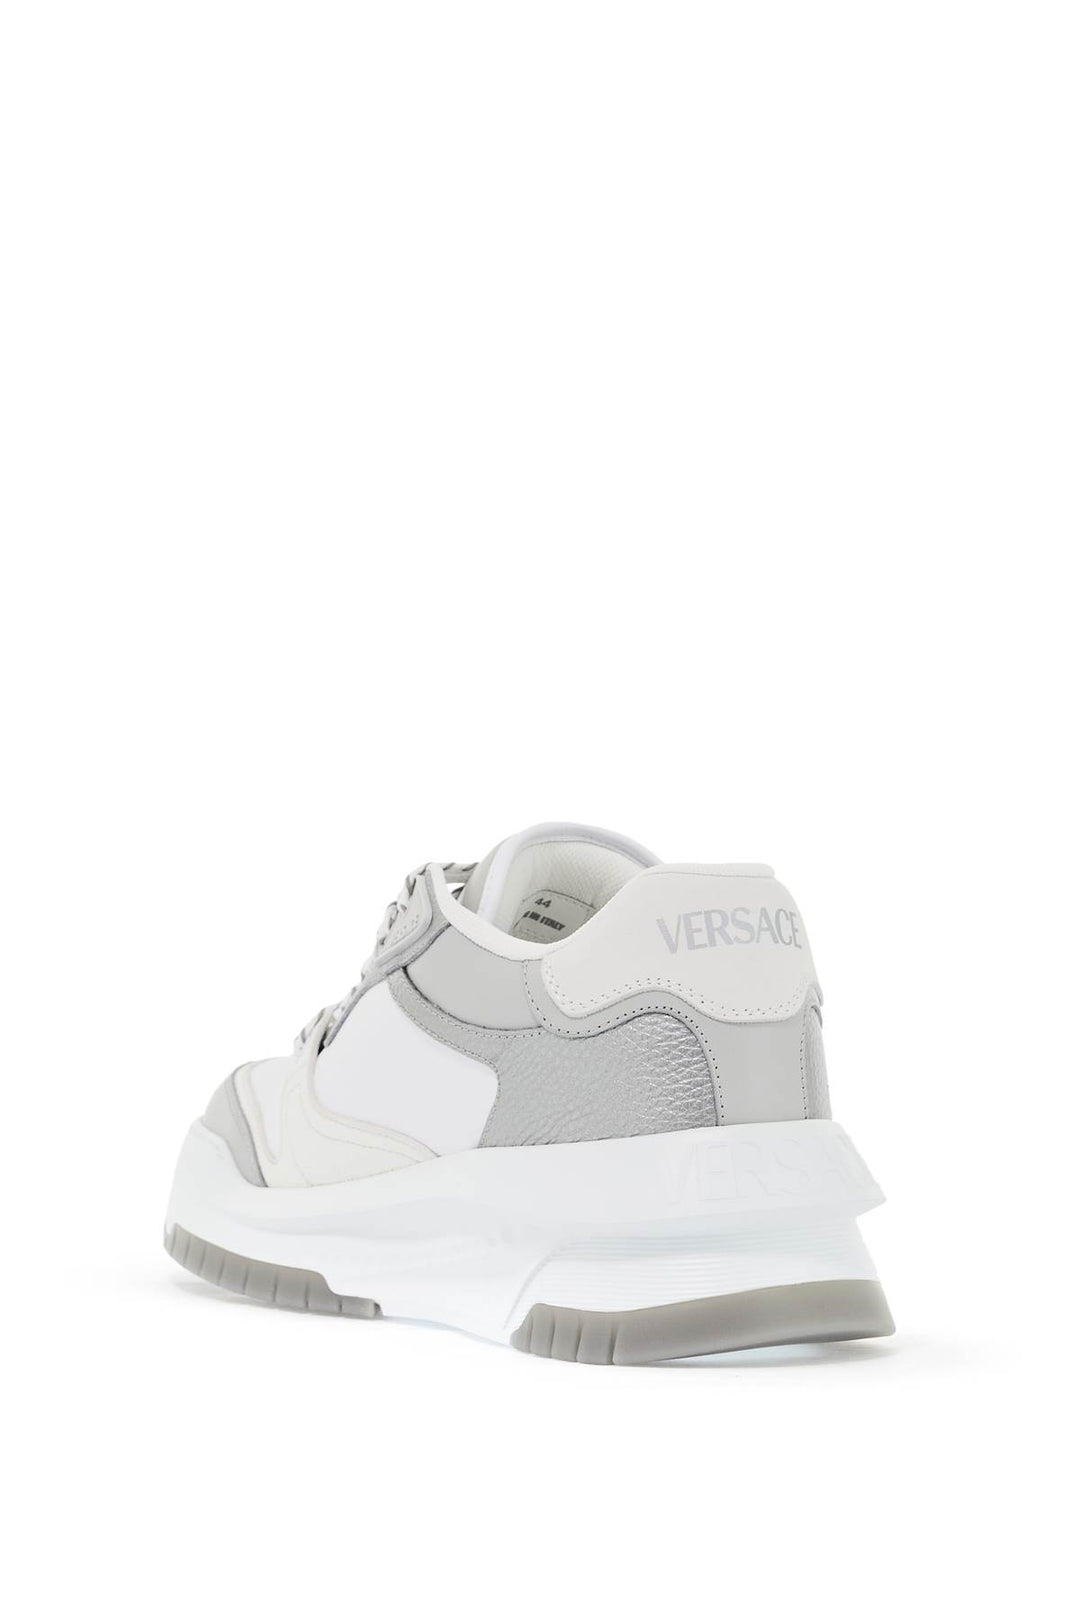 Versace Odyssey Sneakers   Silver